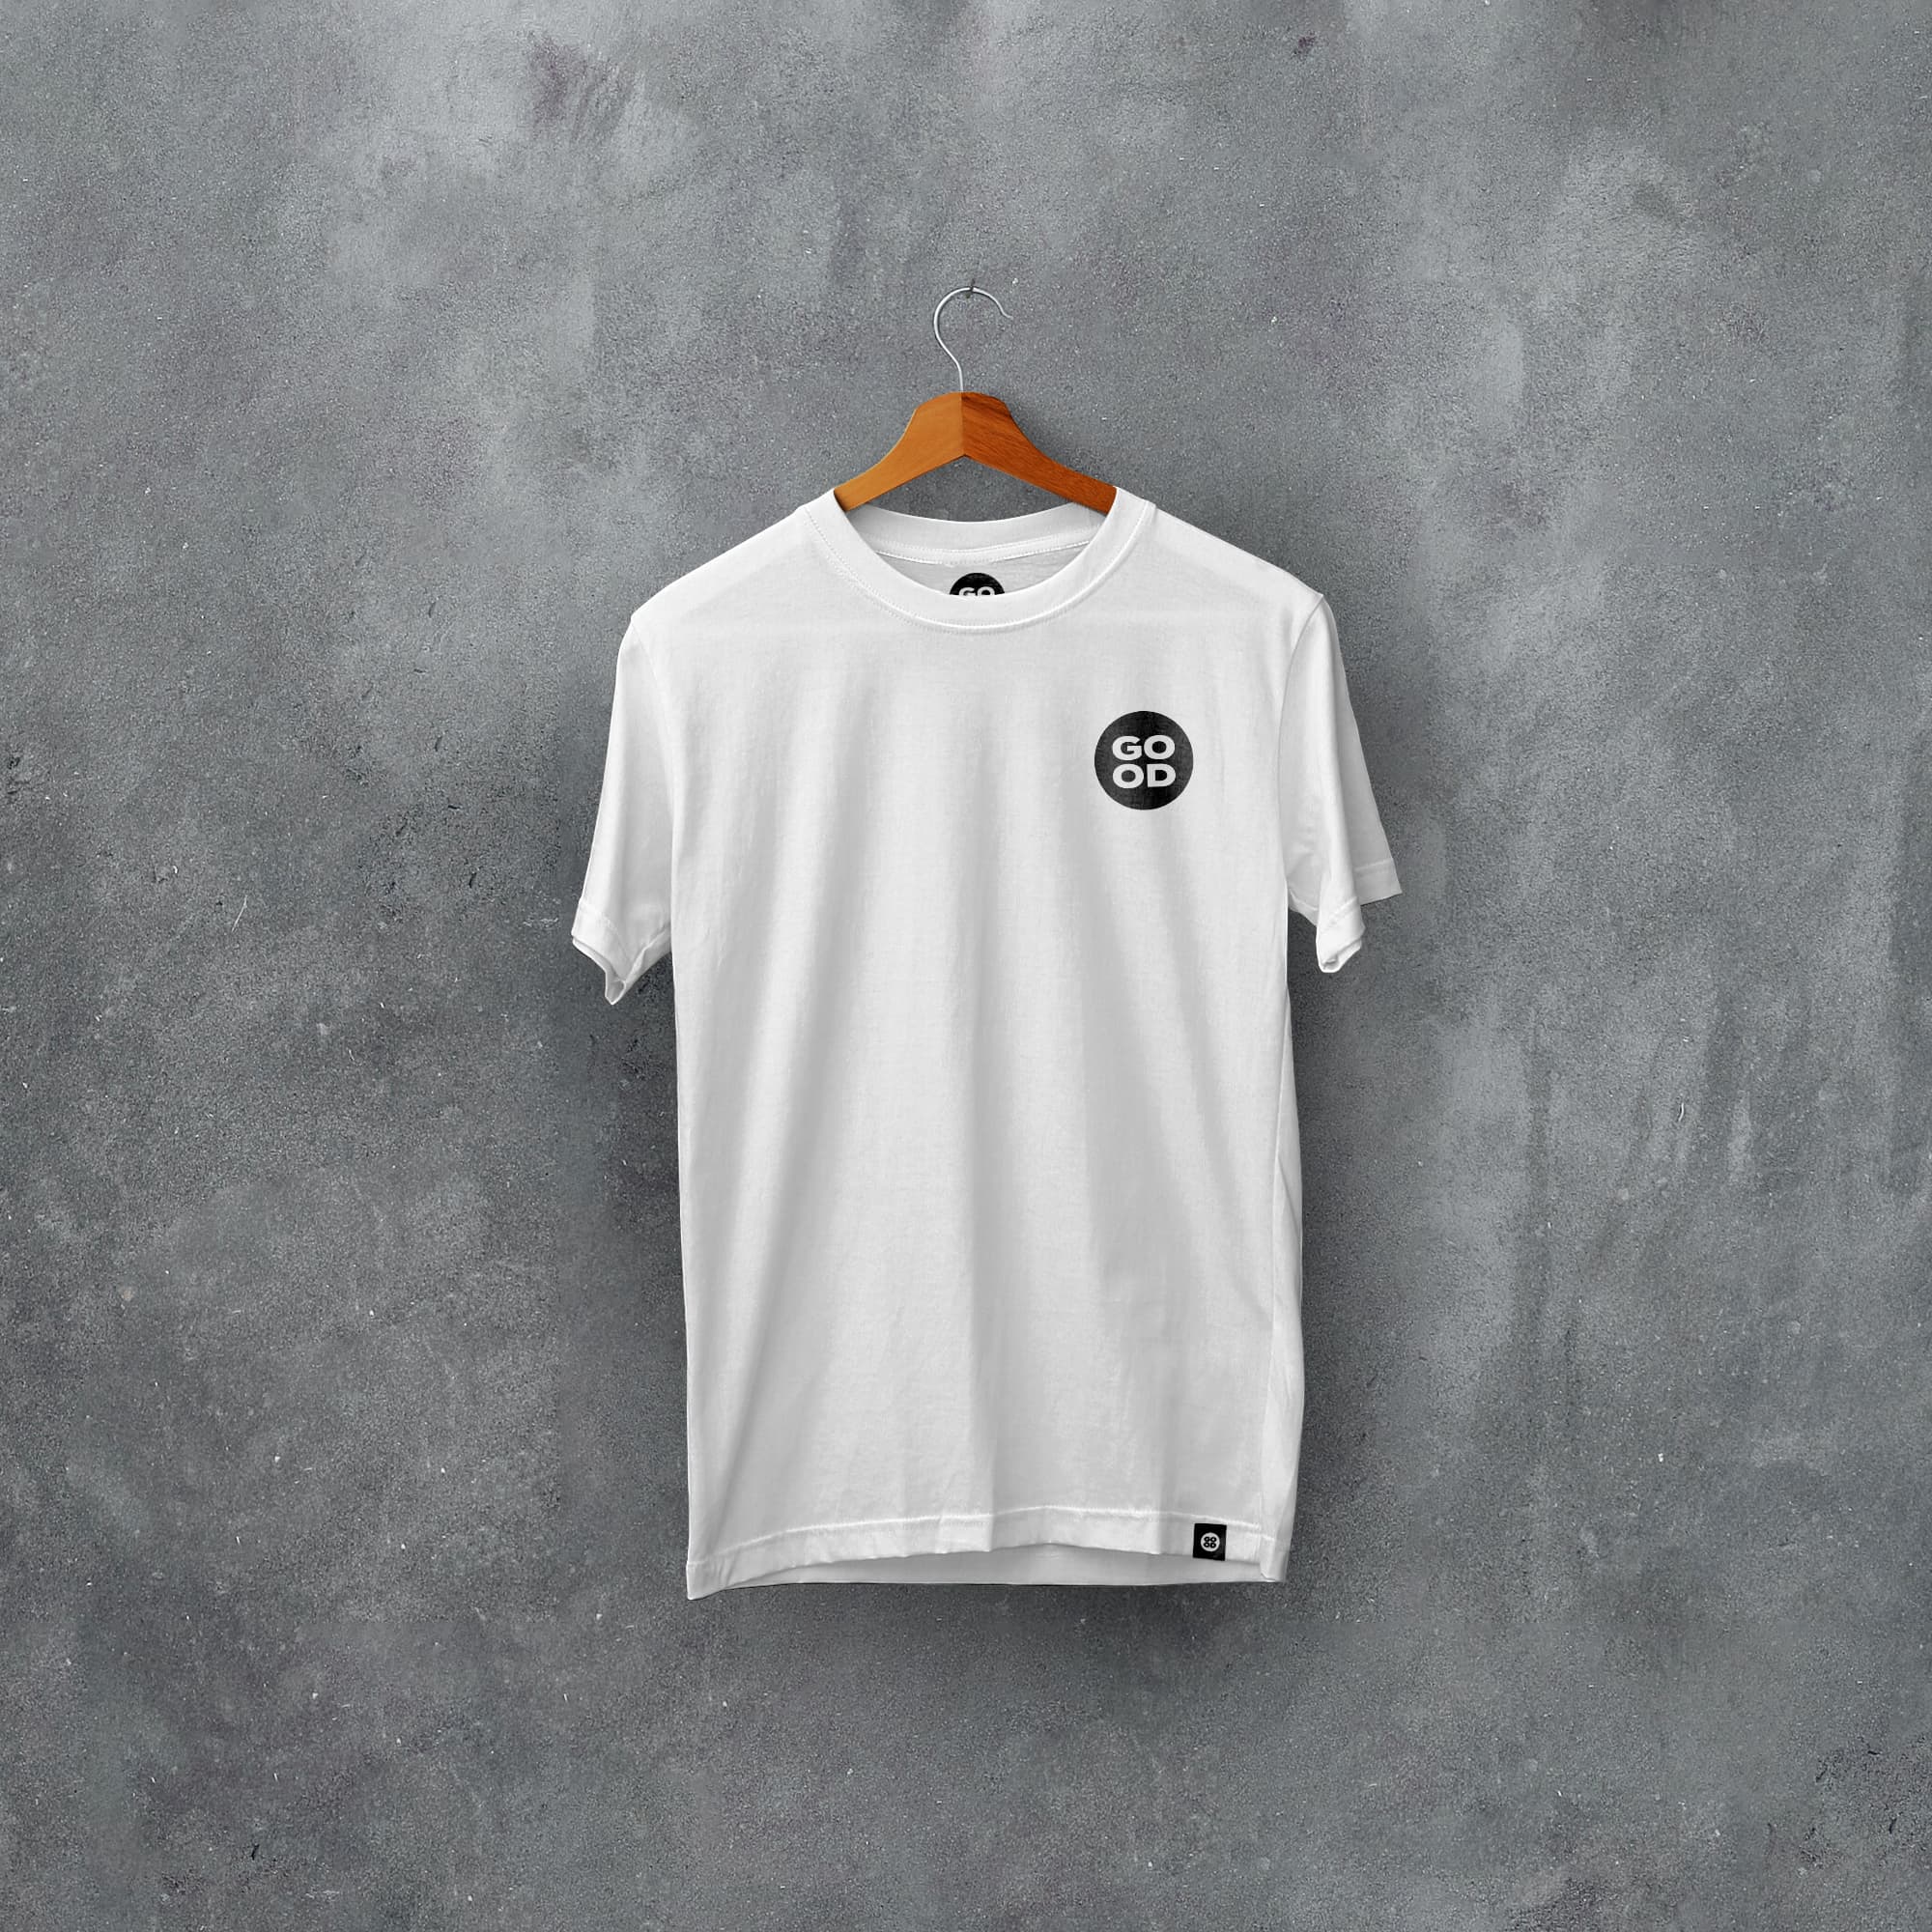 Livingston Classic Kits Football T-Shirt